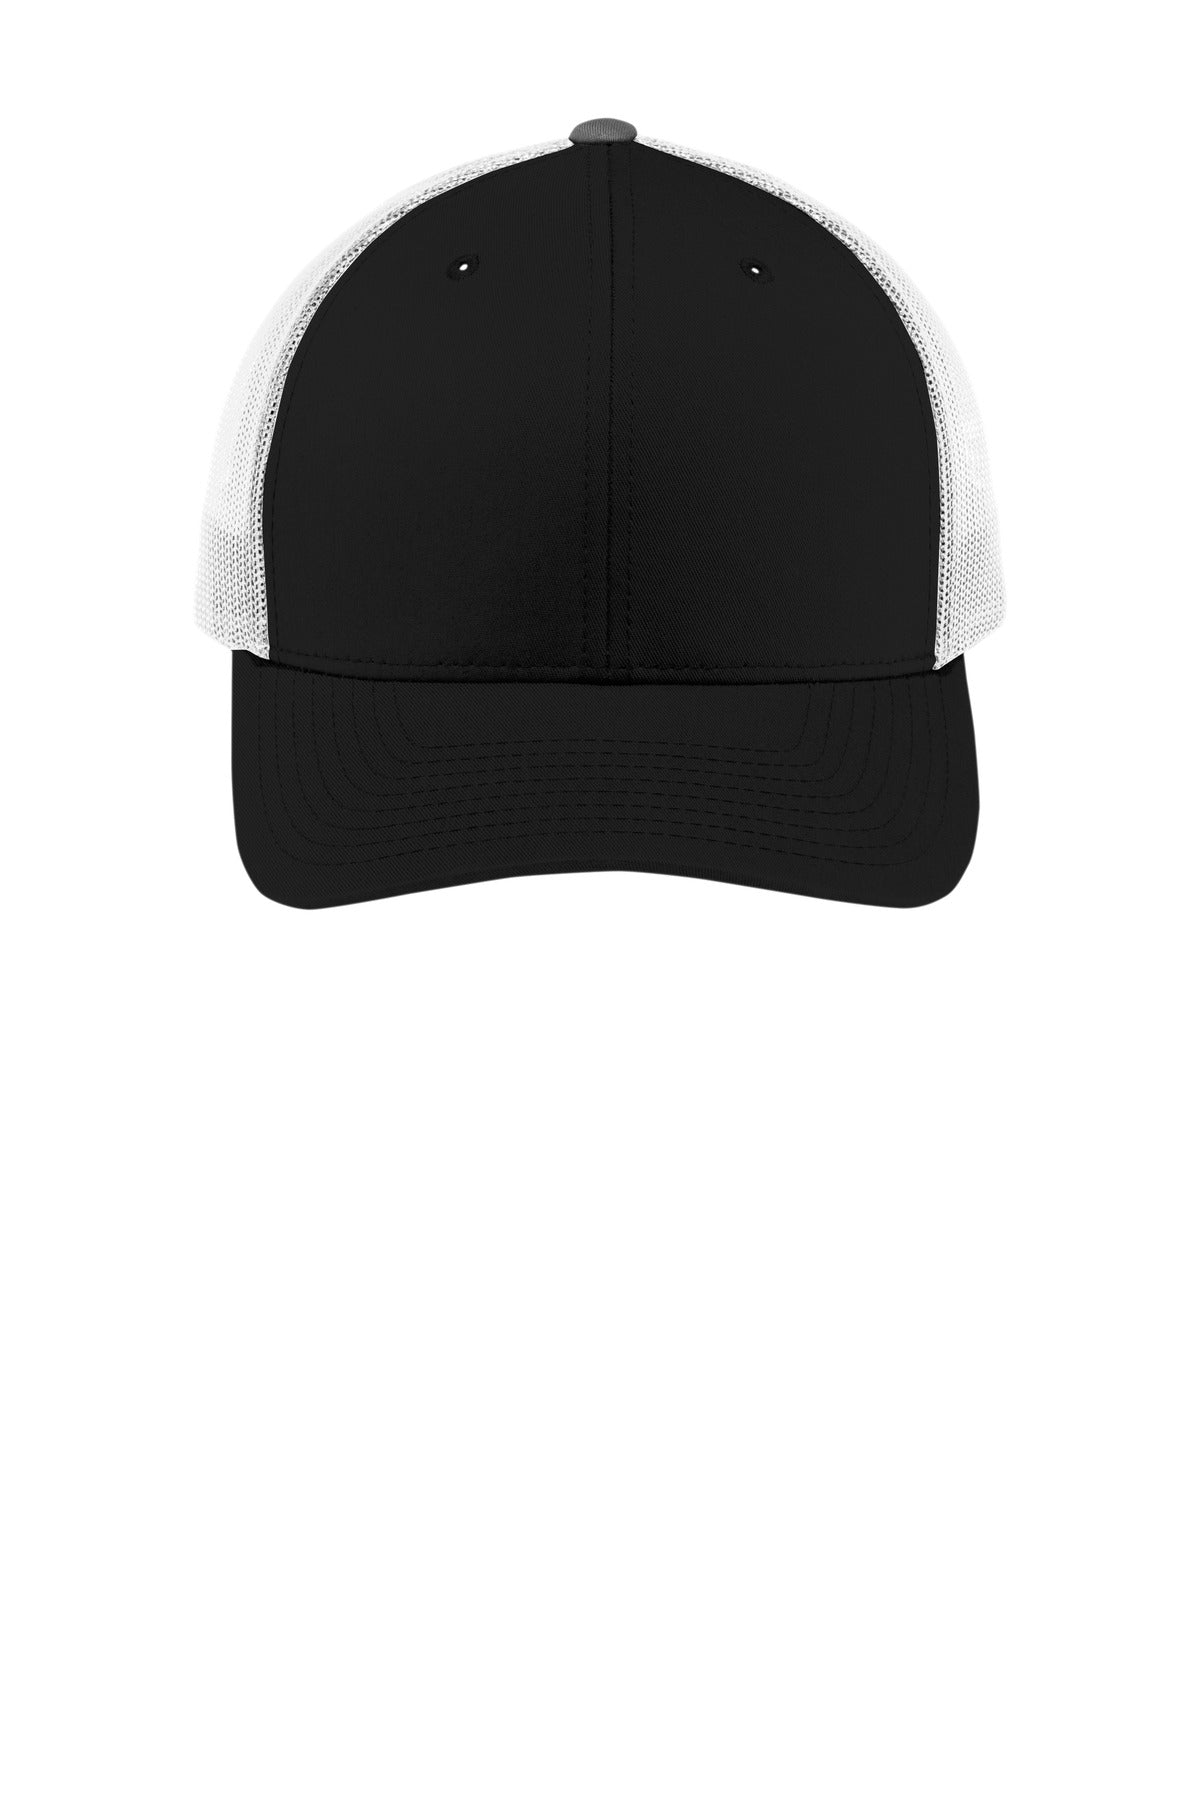 Caps Black/ White OSFA Sport-Tek